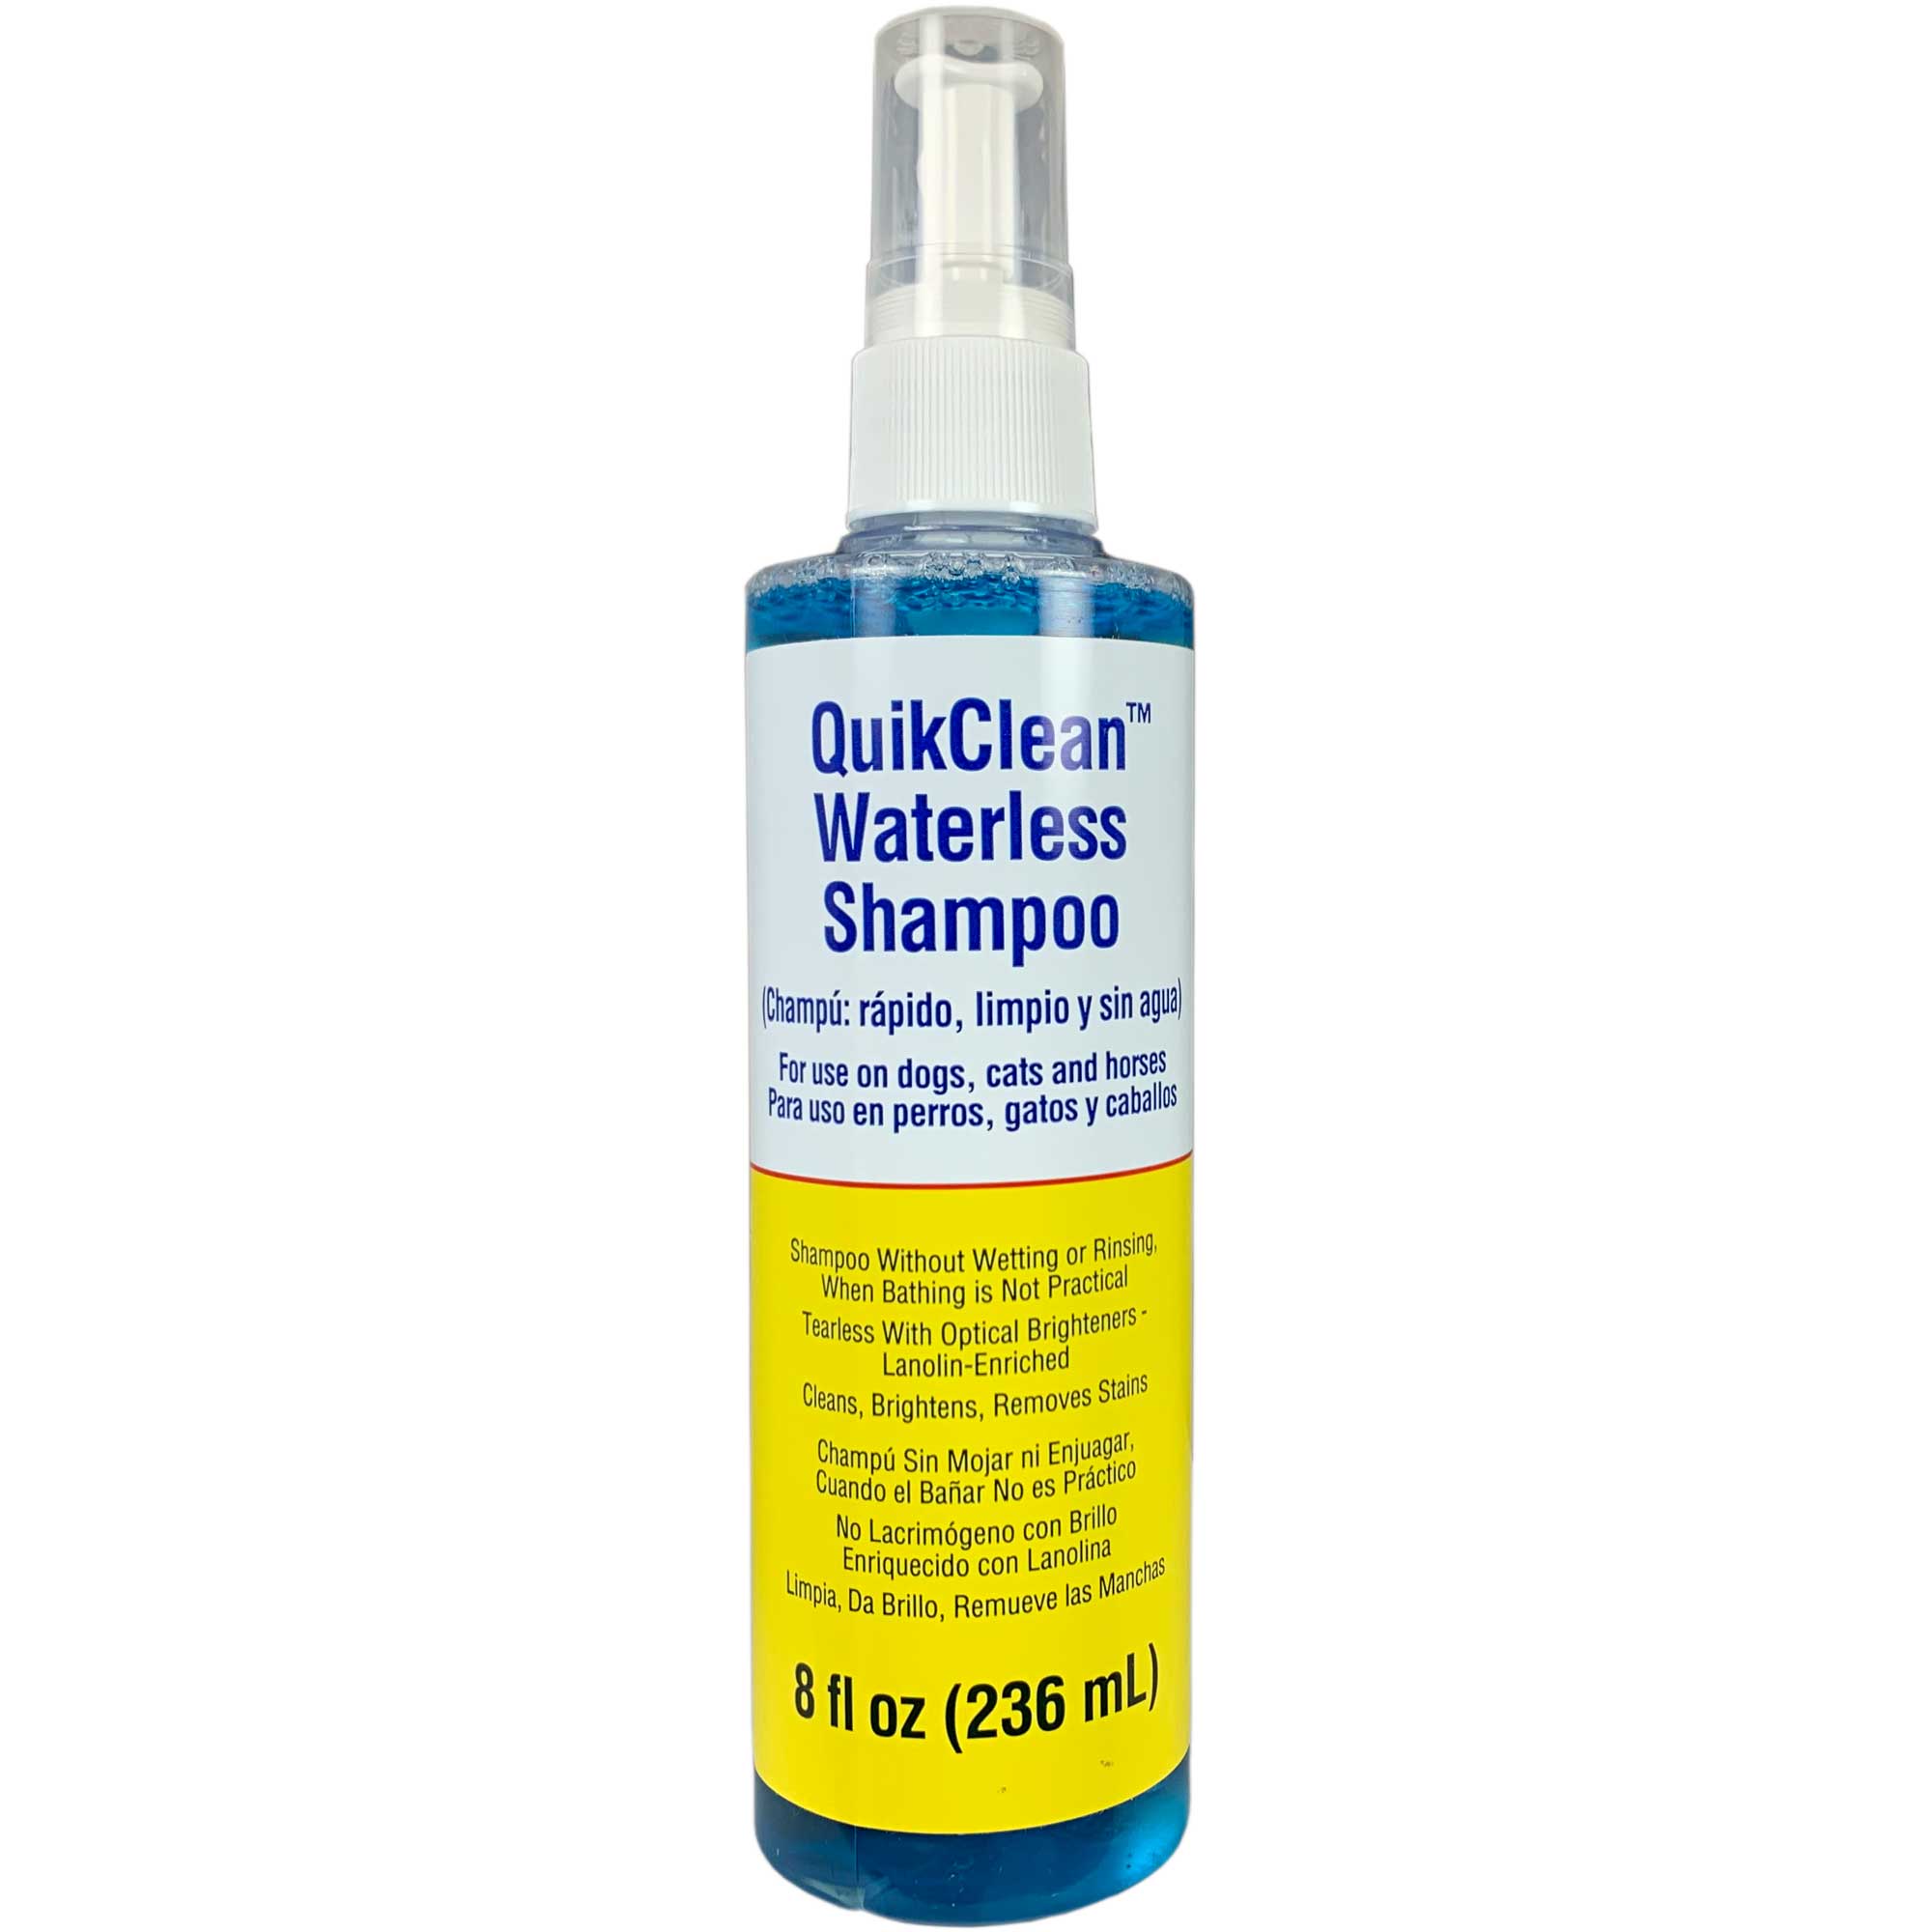 QuikClean Waterless Shampoo Usage